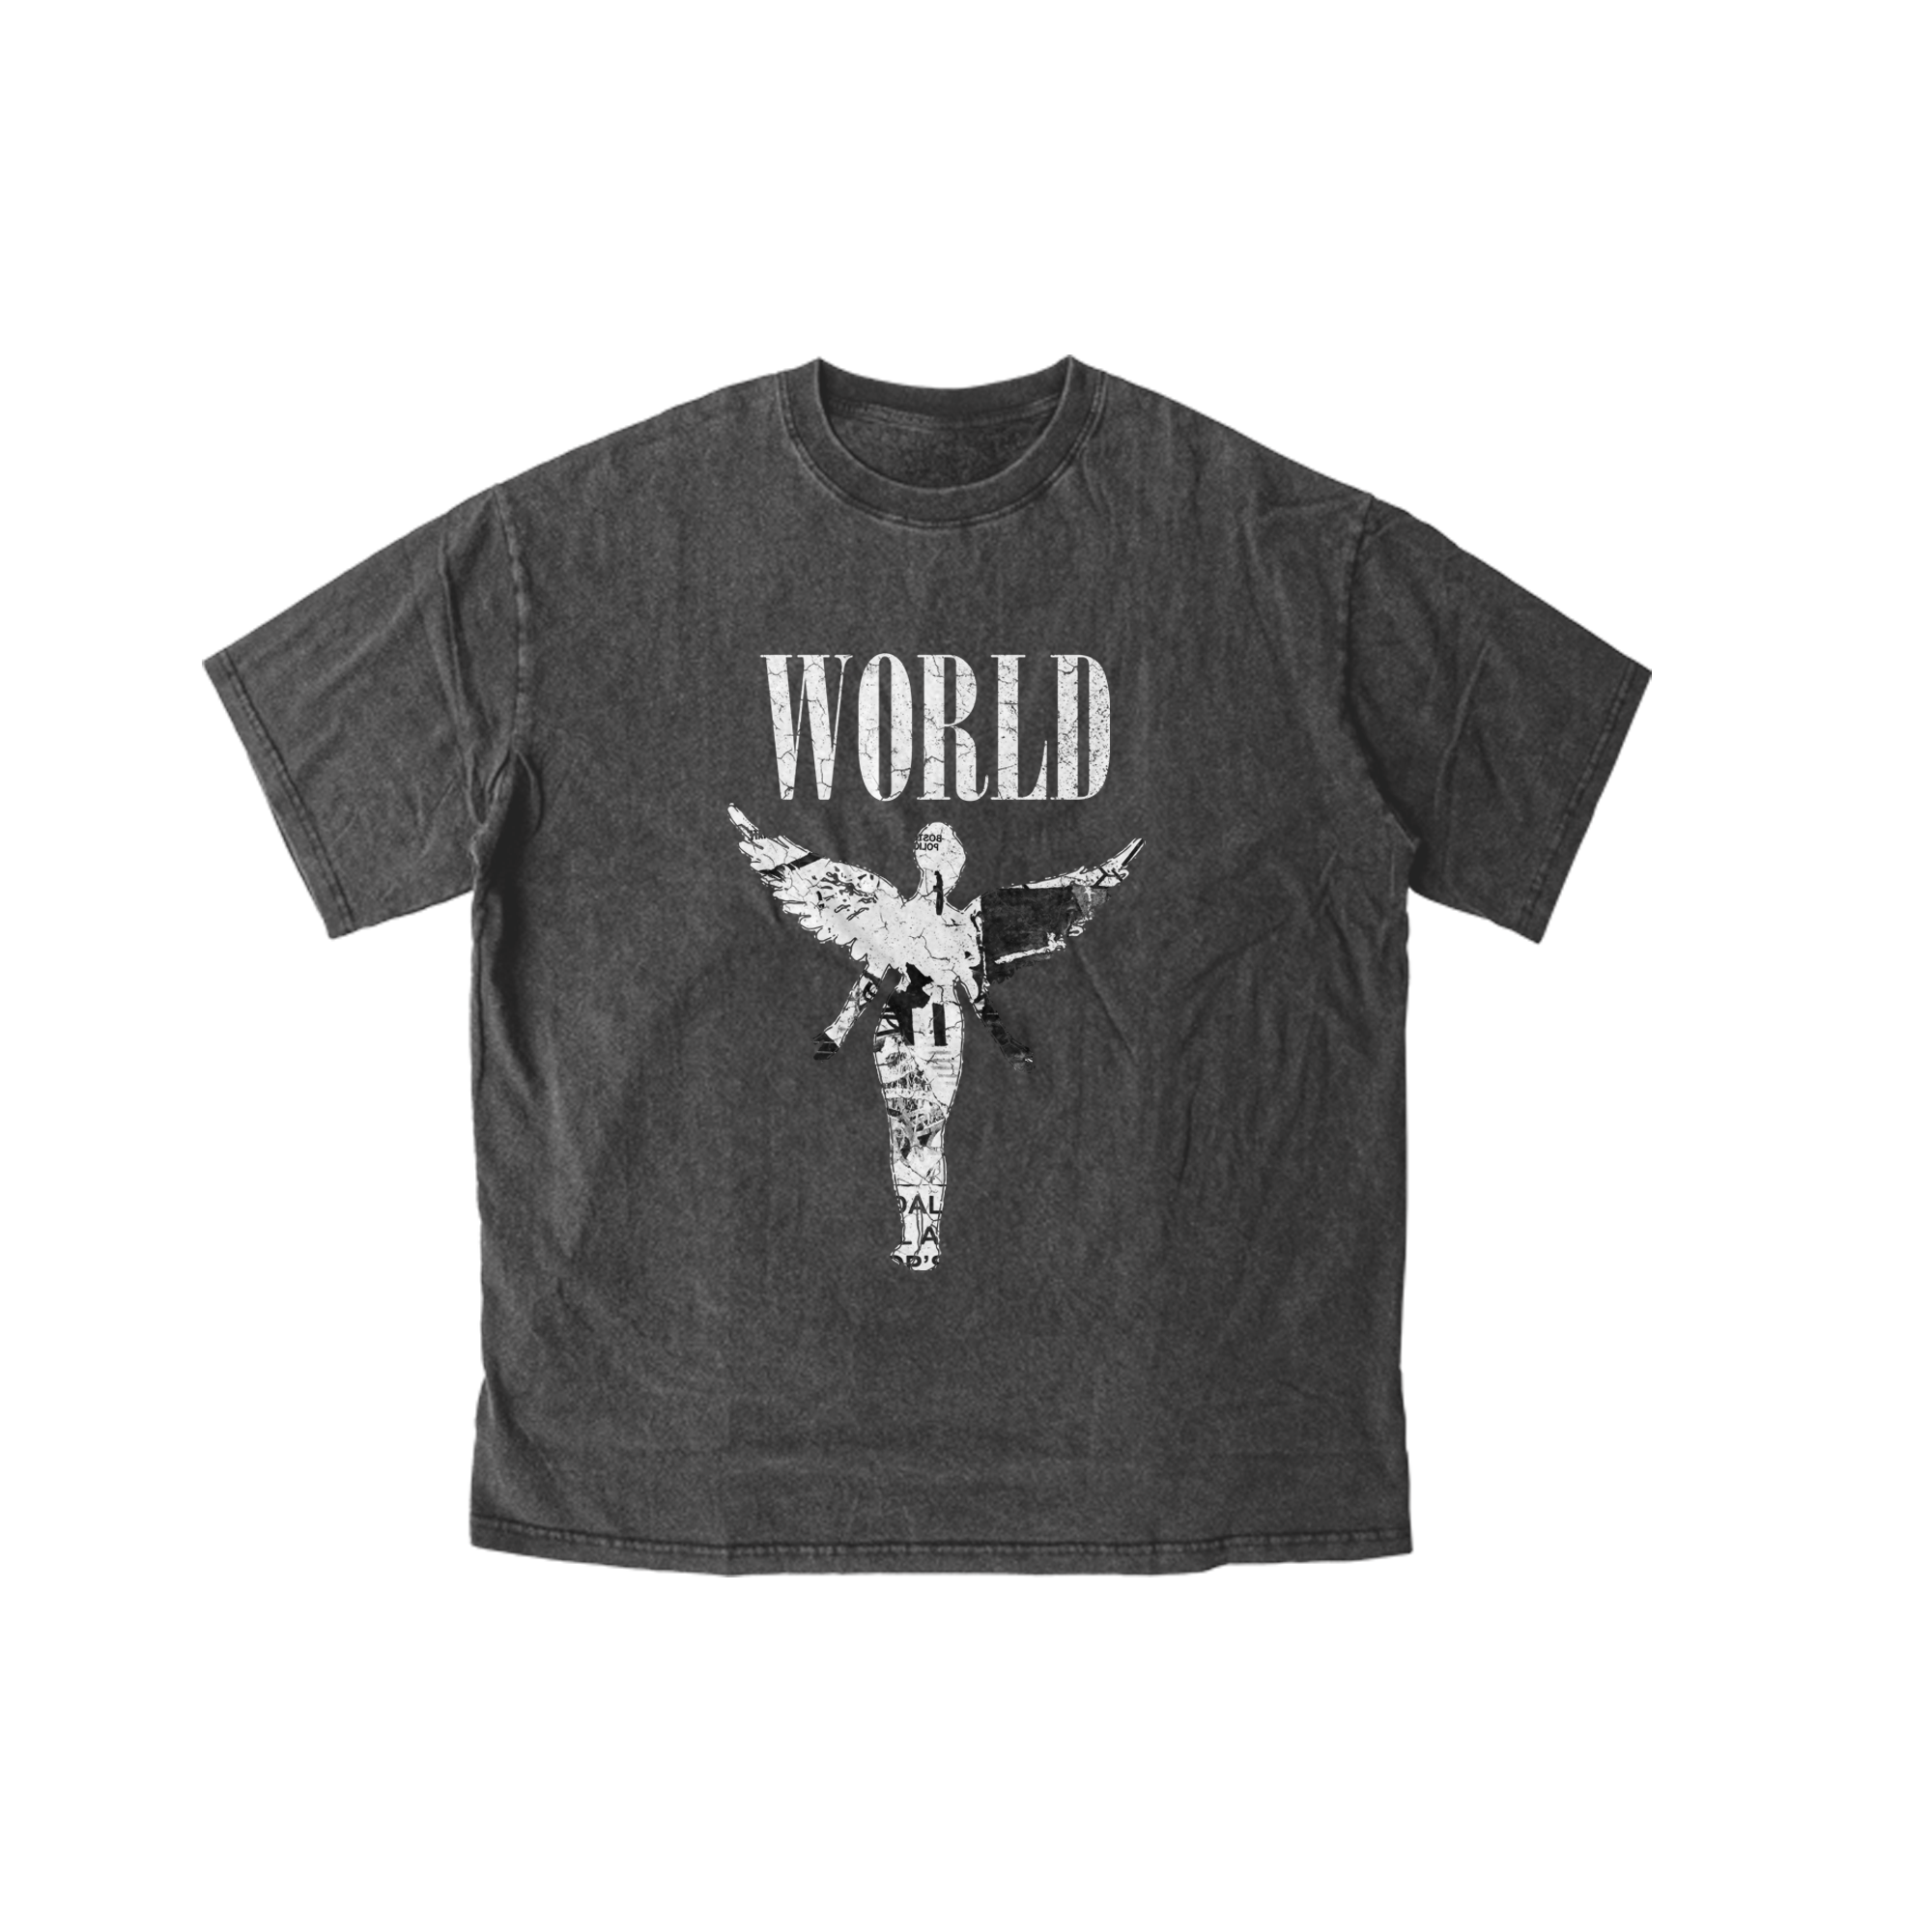 The World - Nirvana Angel Shirt